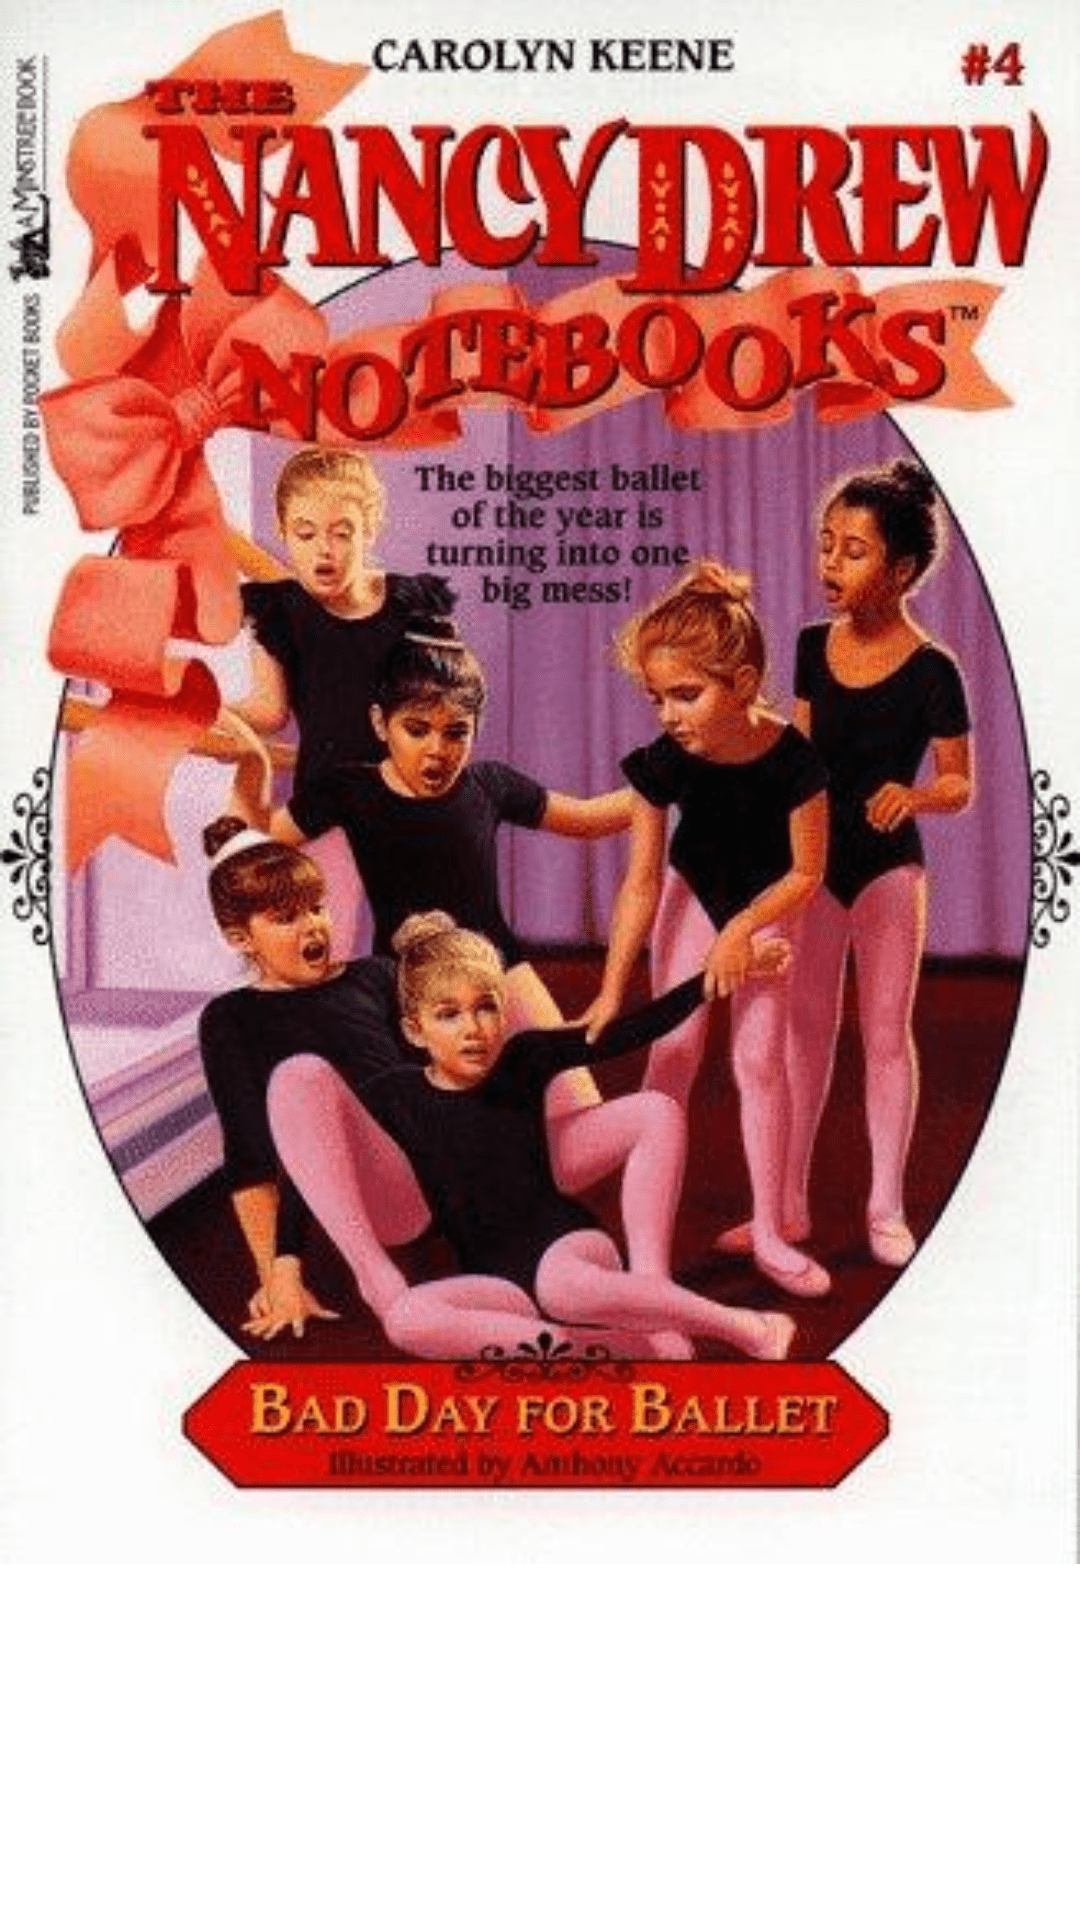 Bad Day for Ballet